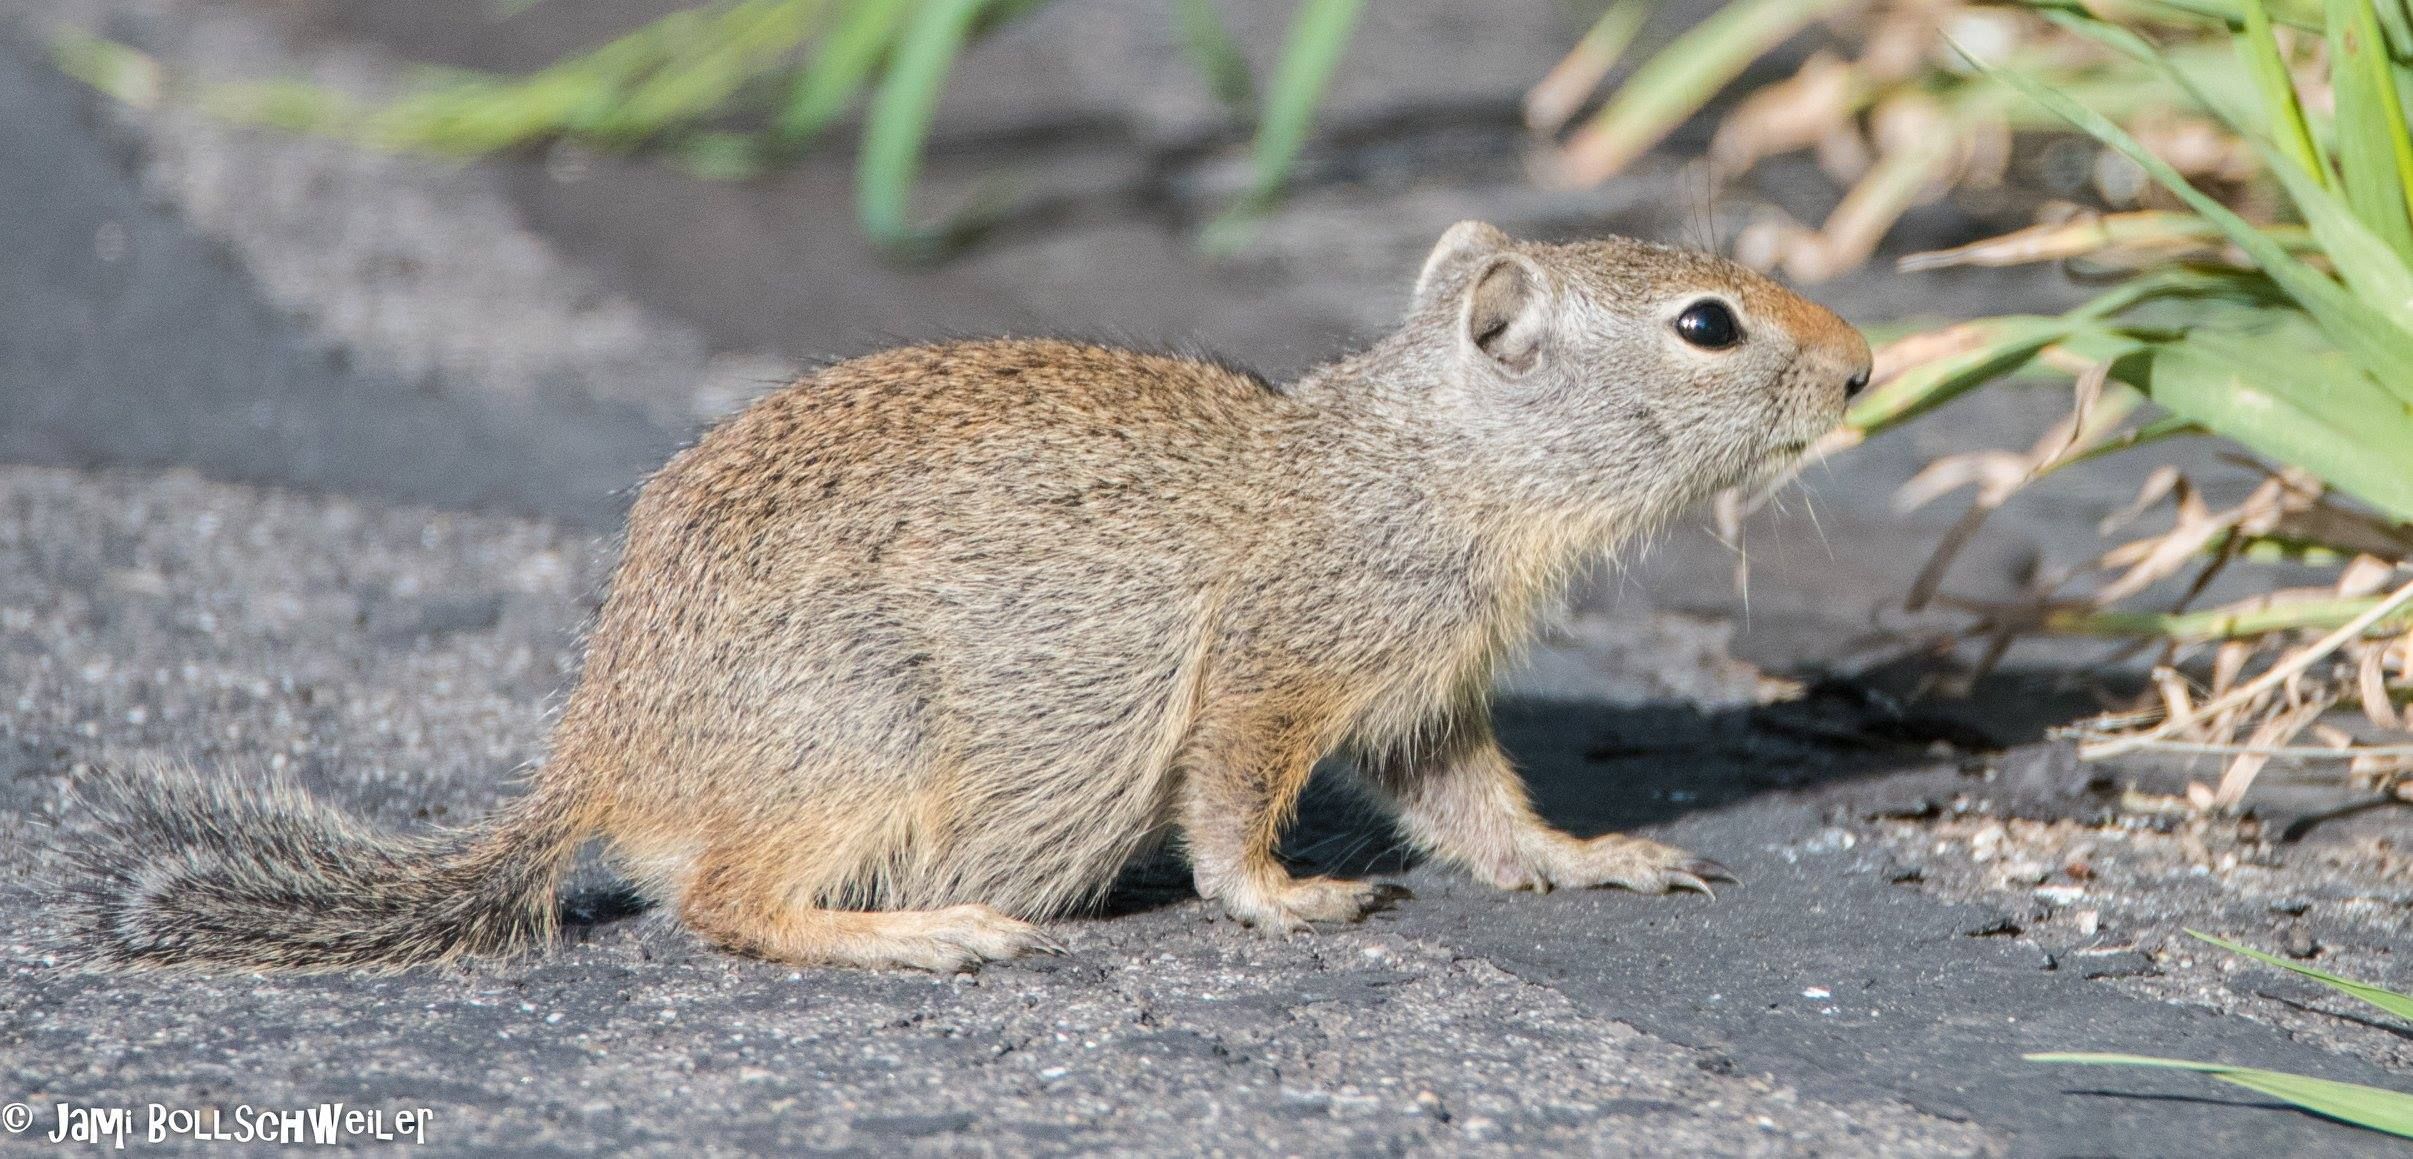 Uinta Ground Squirrel Park City, Utah | My travel photography ...